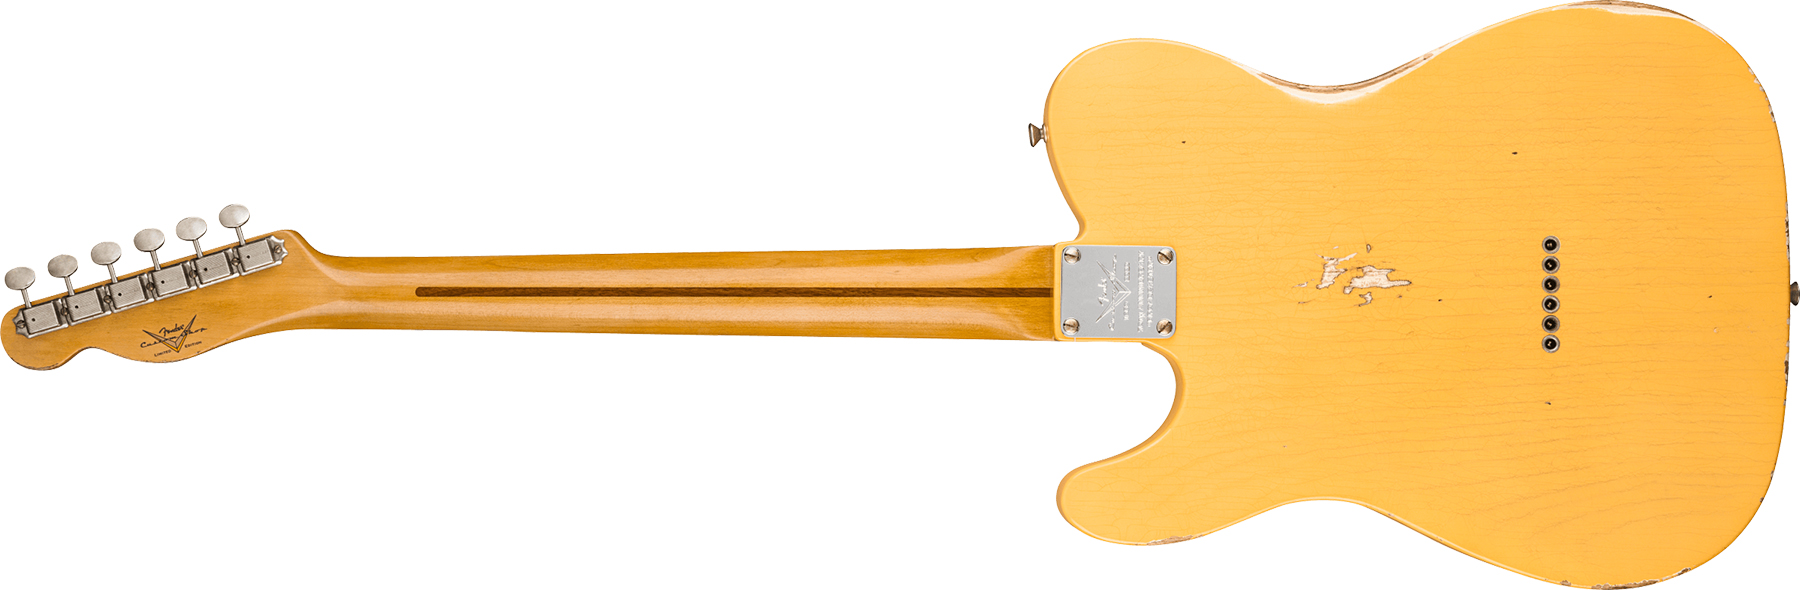 Fender Custom Shop Broadcaster Tele 70th Anniversary Ltd Mn - Relic Aged Nocaster Blonde - Guitare Électrique Forme Tel - Variation 1